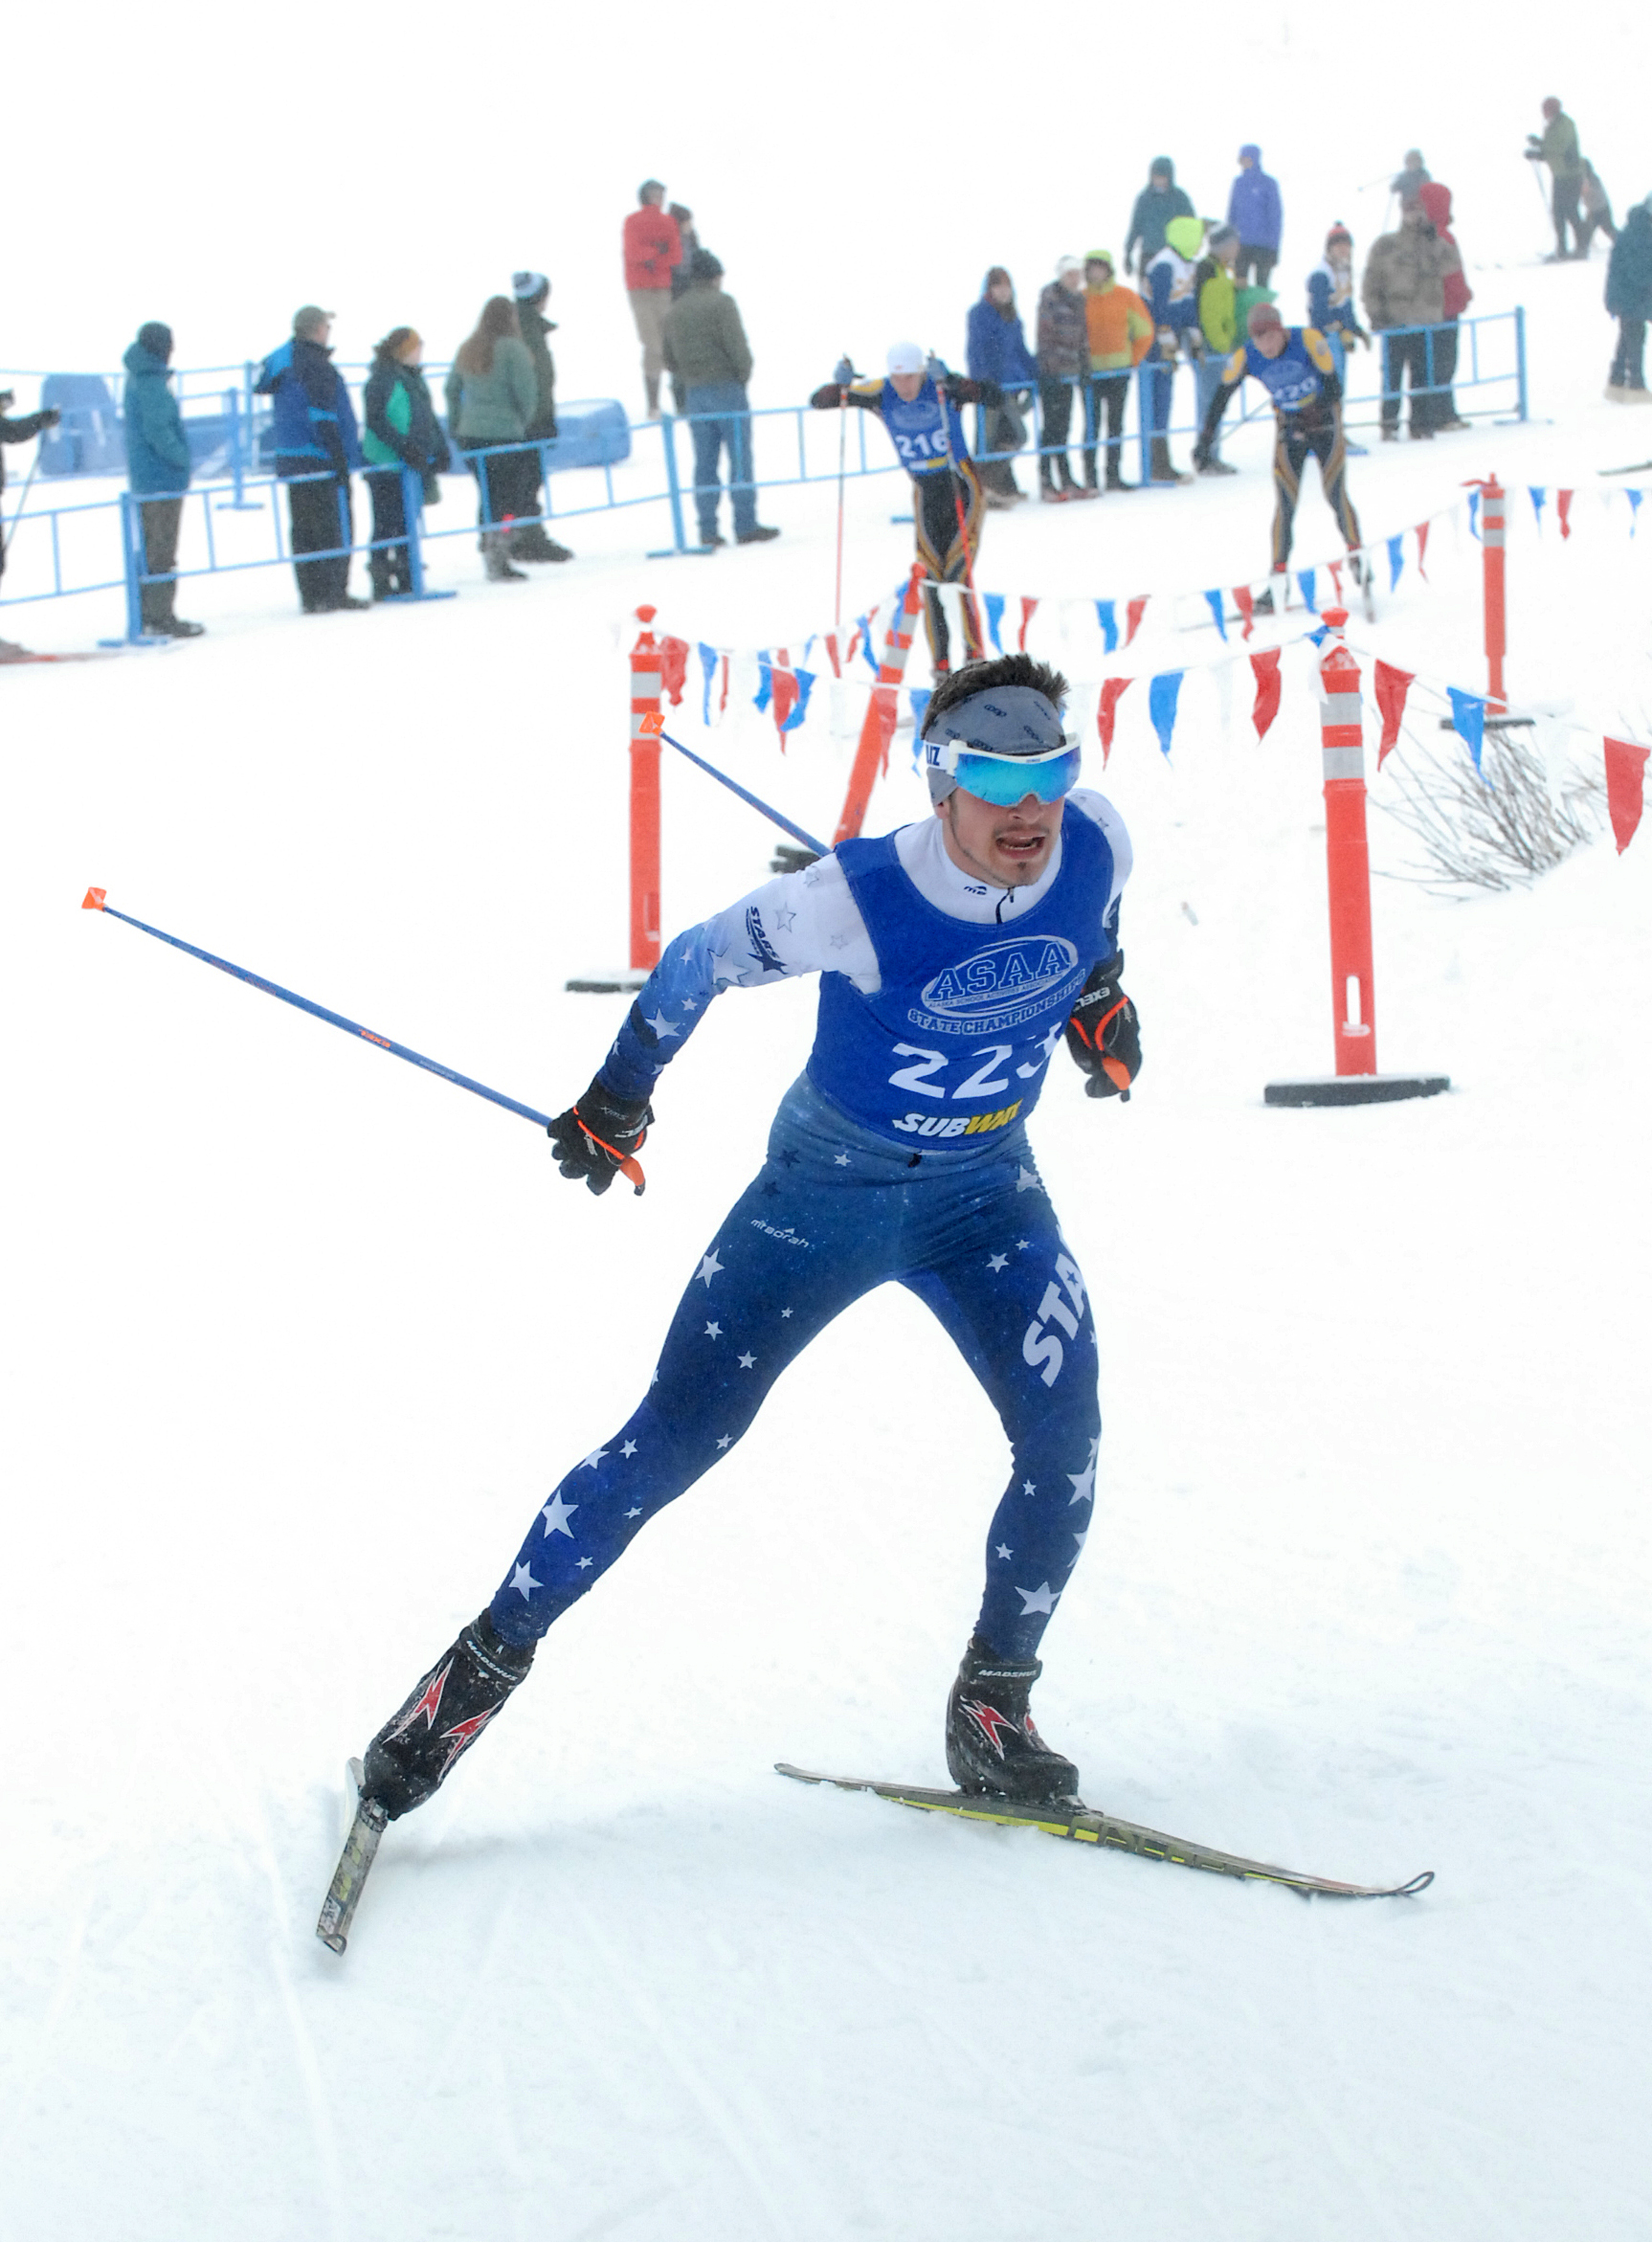 Soldotna skier Koby Vinson races Friday at the state ski championships at Kincaid Park in Anchorage (Photo by Matt Tunseth/Alaska Star)